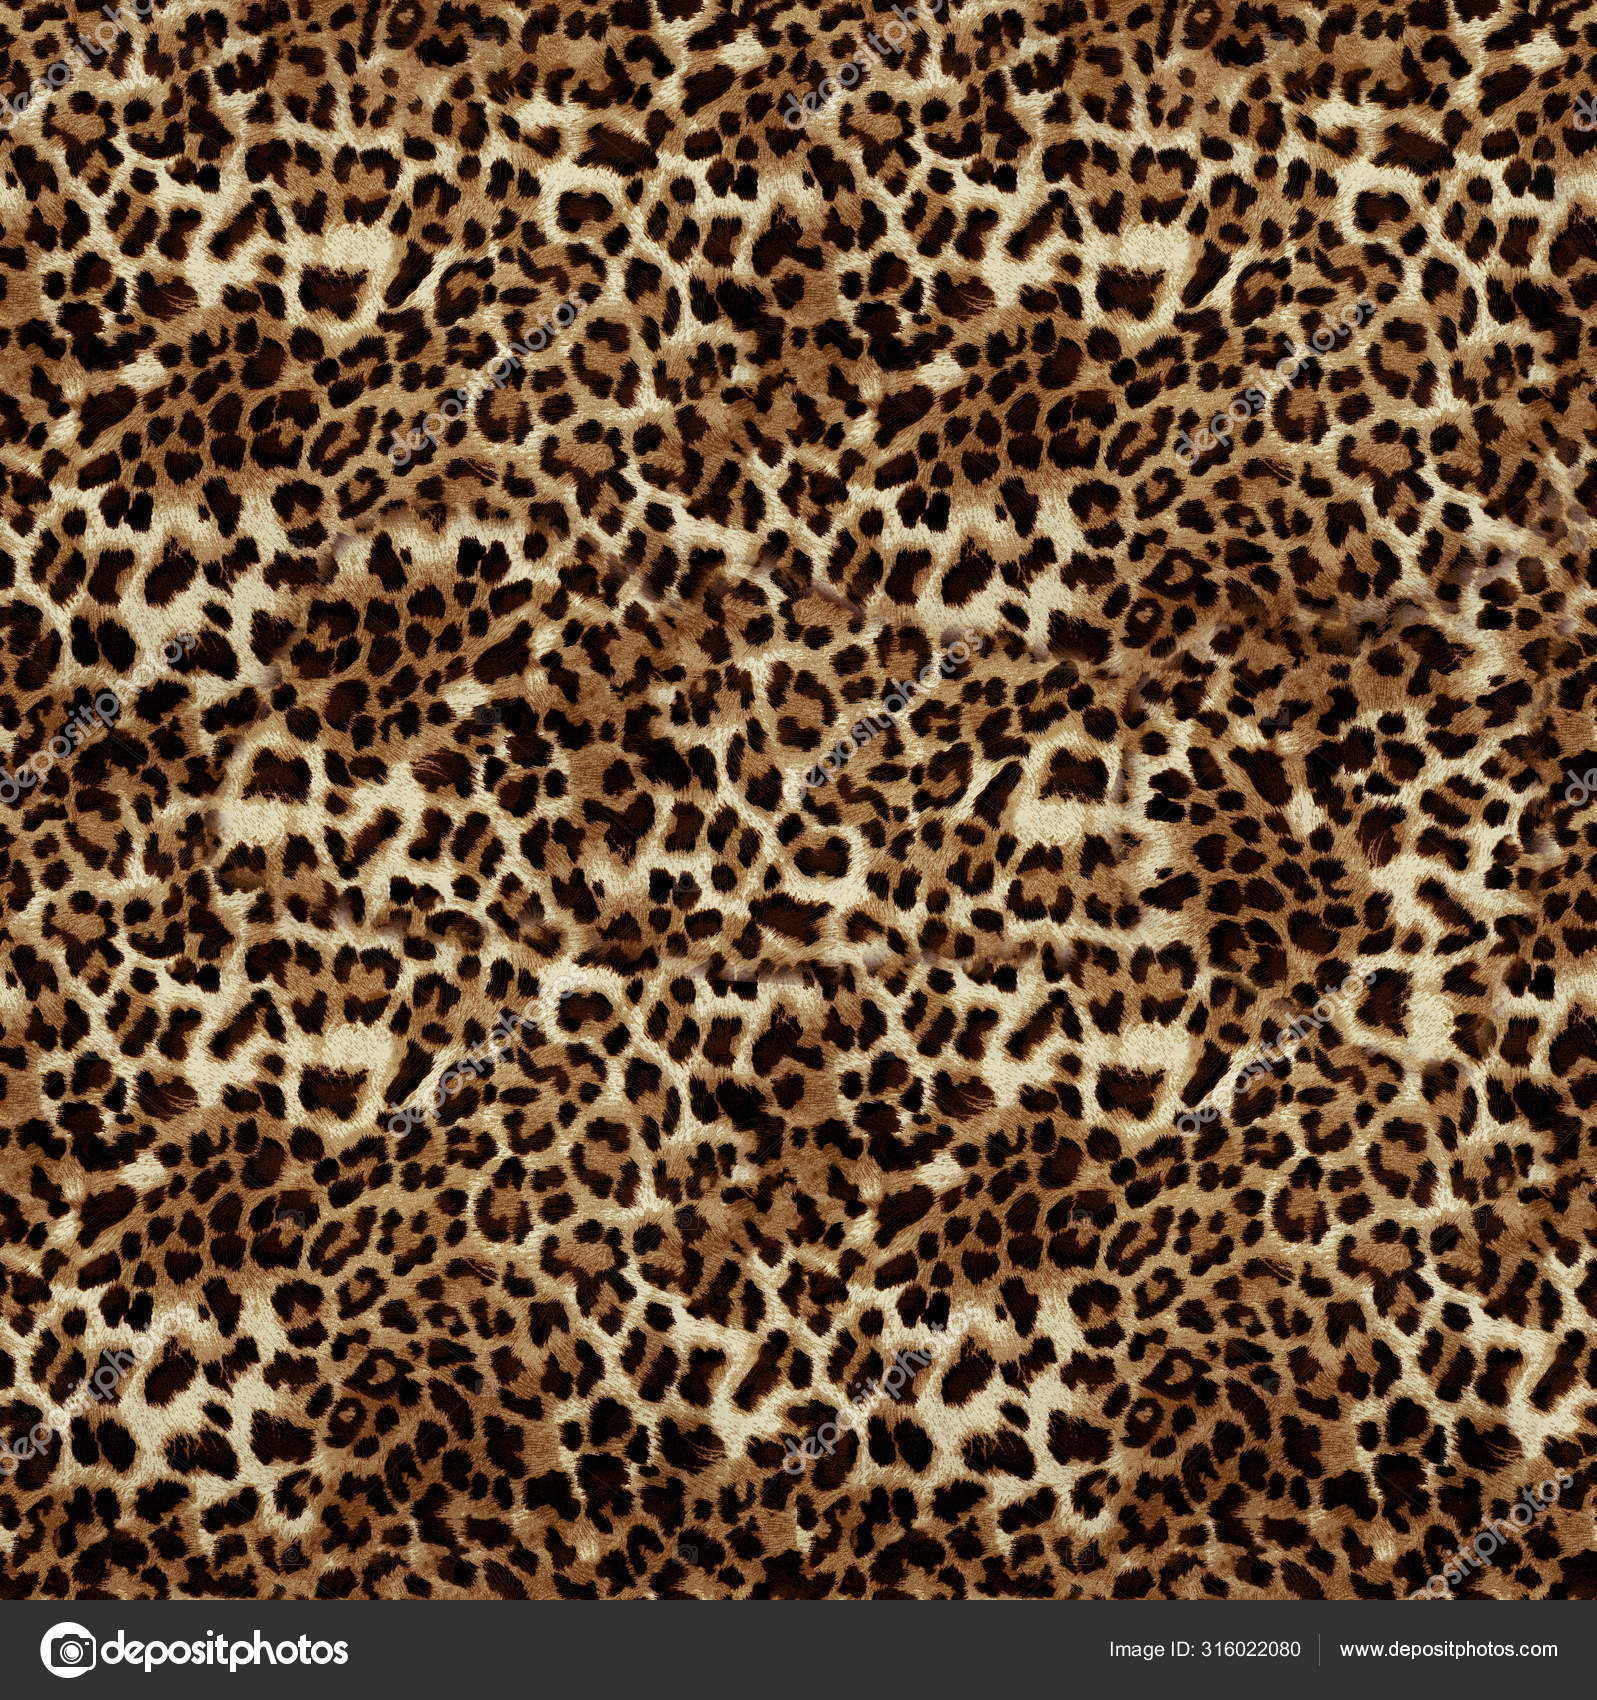 Animal skin print notebooks Leopard Tiger Crocodile & Python Stone paper luxury